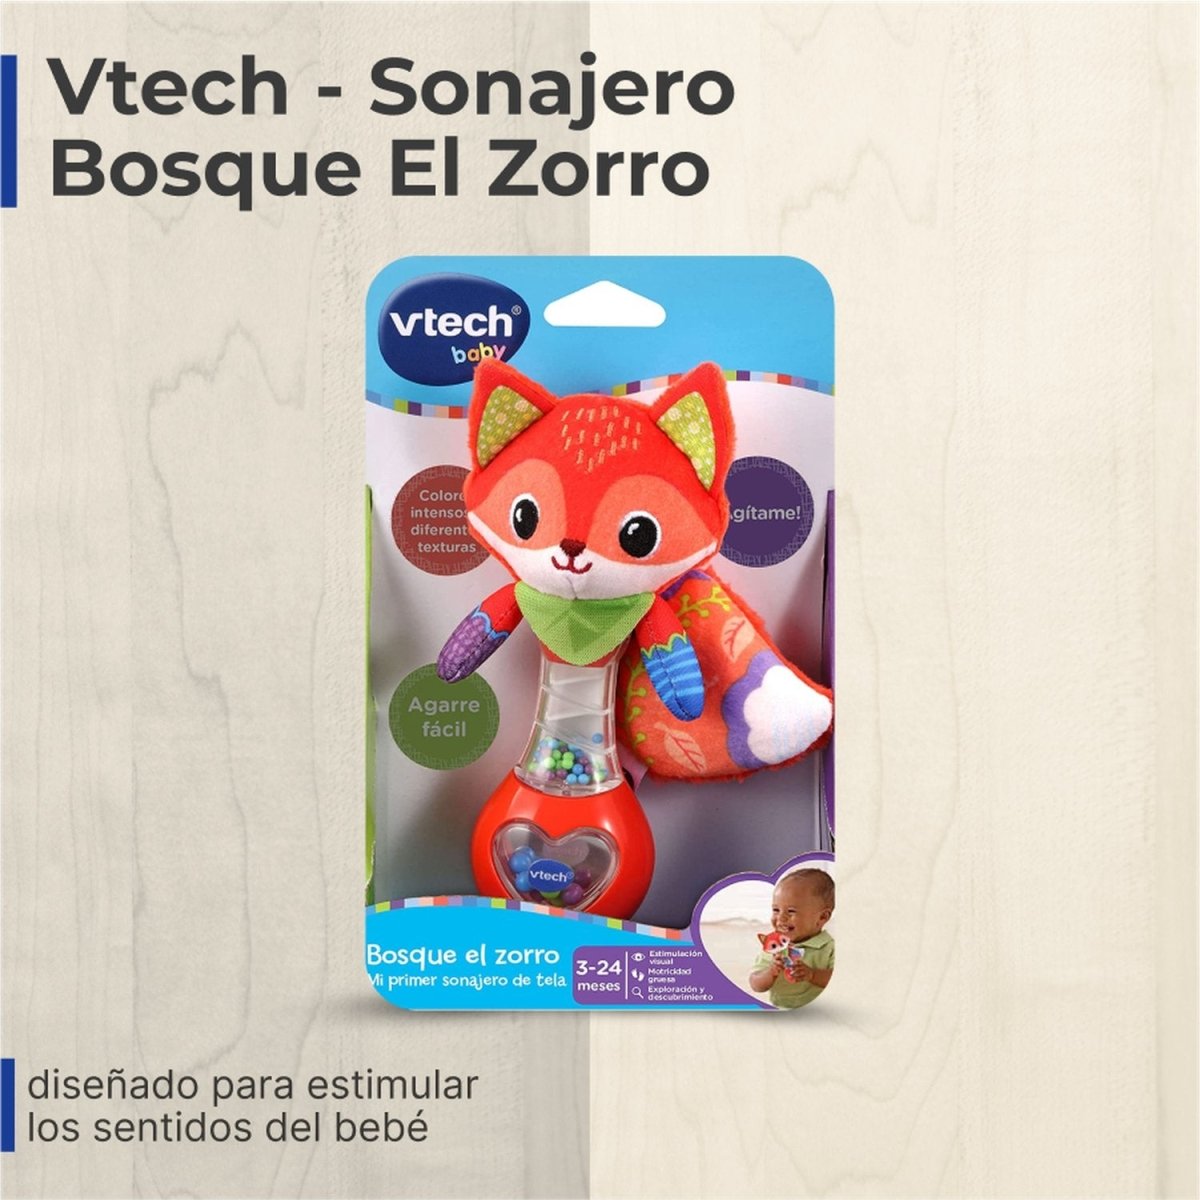 Vtech - Sonajero Bosque El Zorro - VTech - COMERCIAL BELSAN -